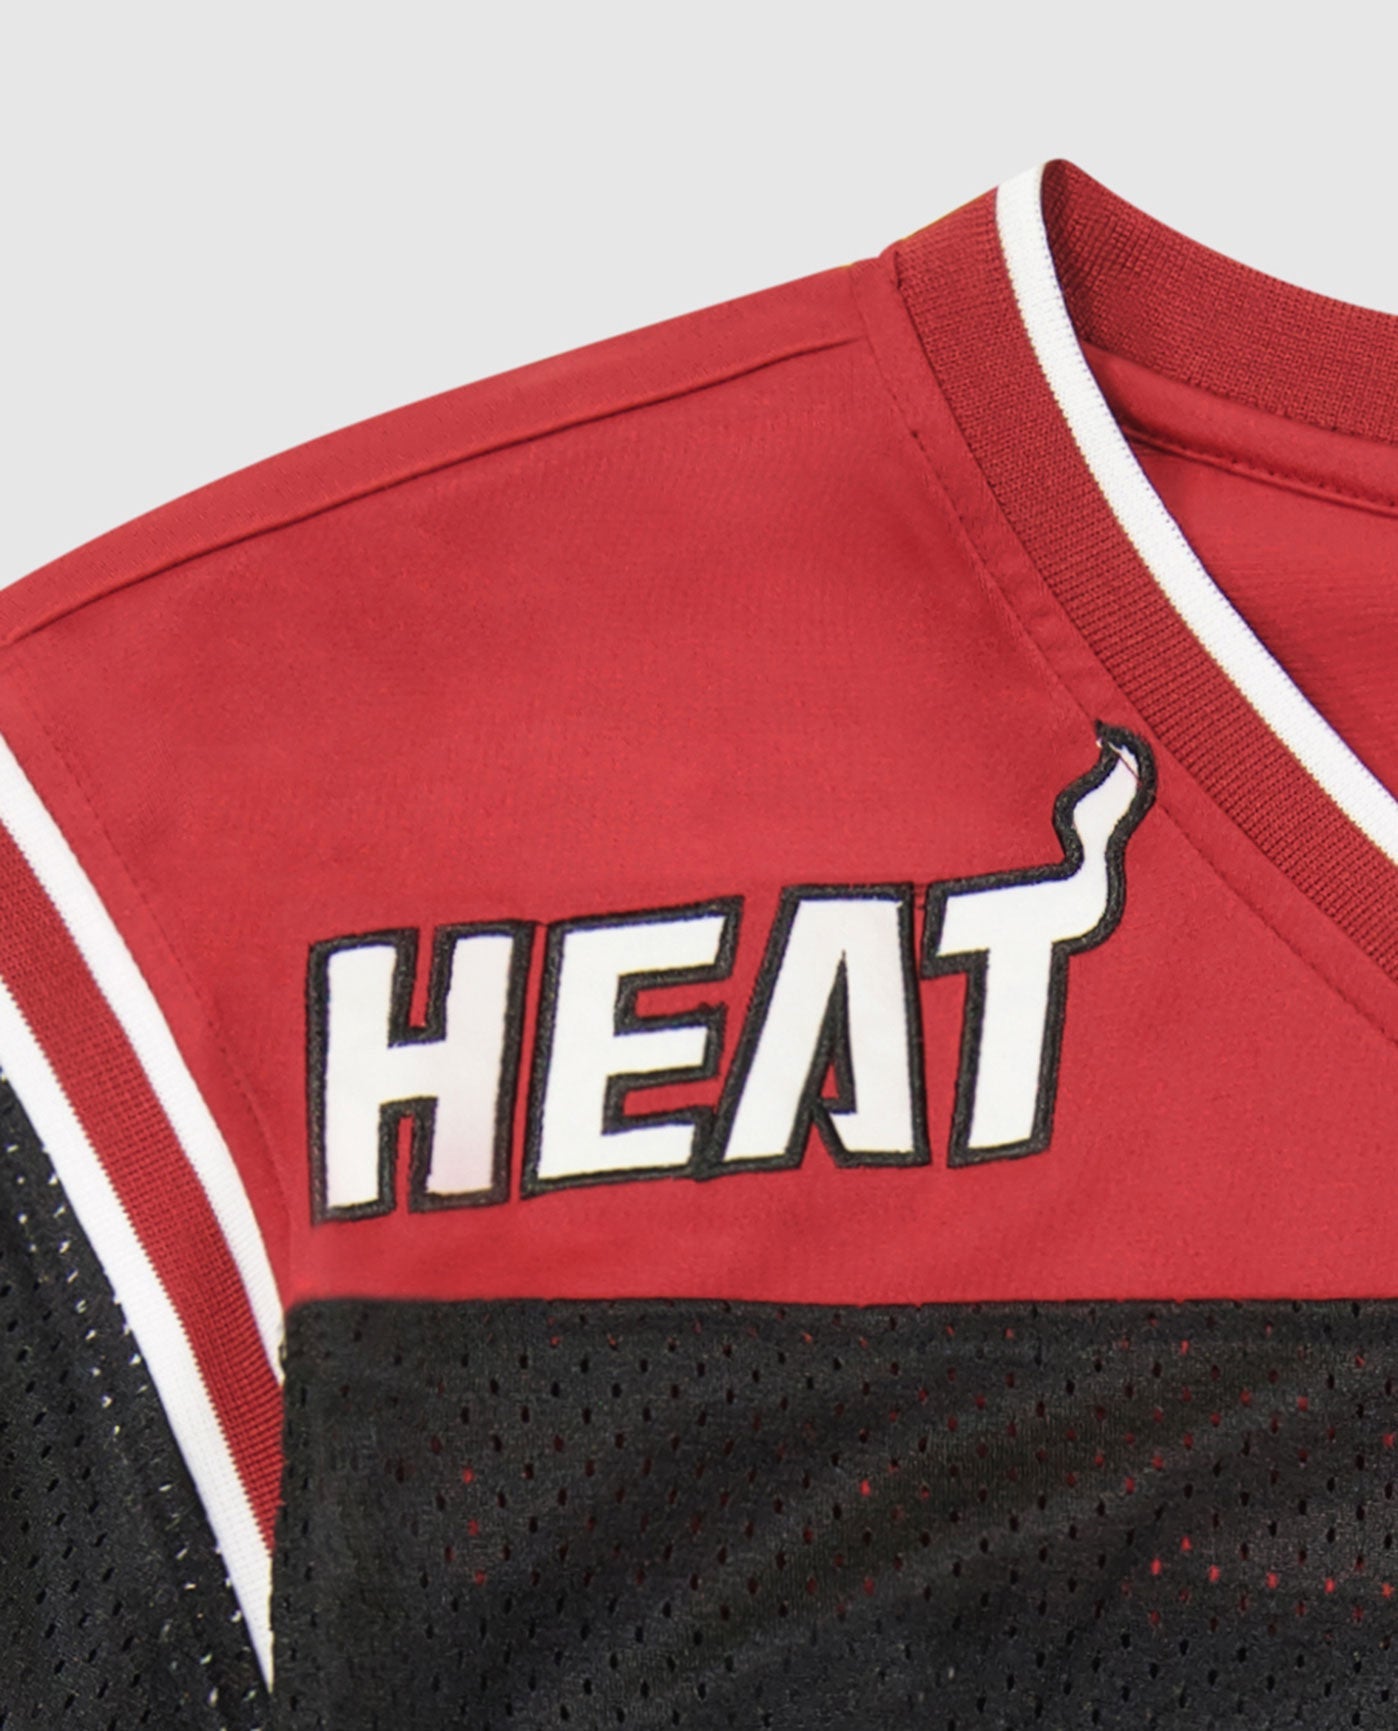 heat authentic jersey